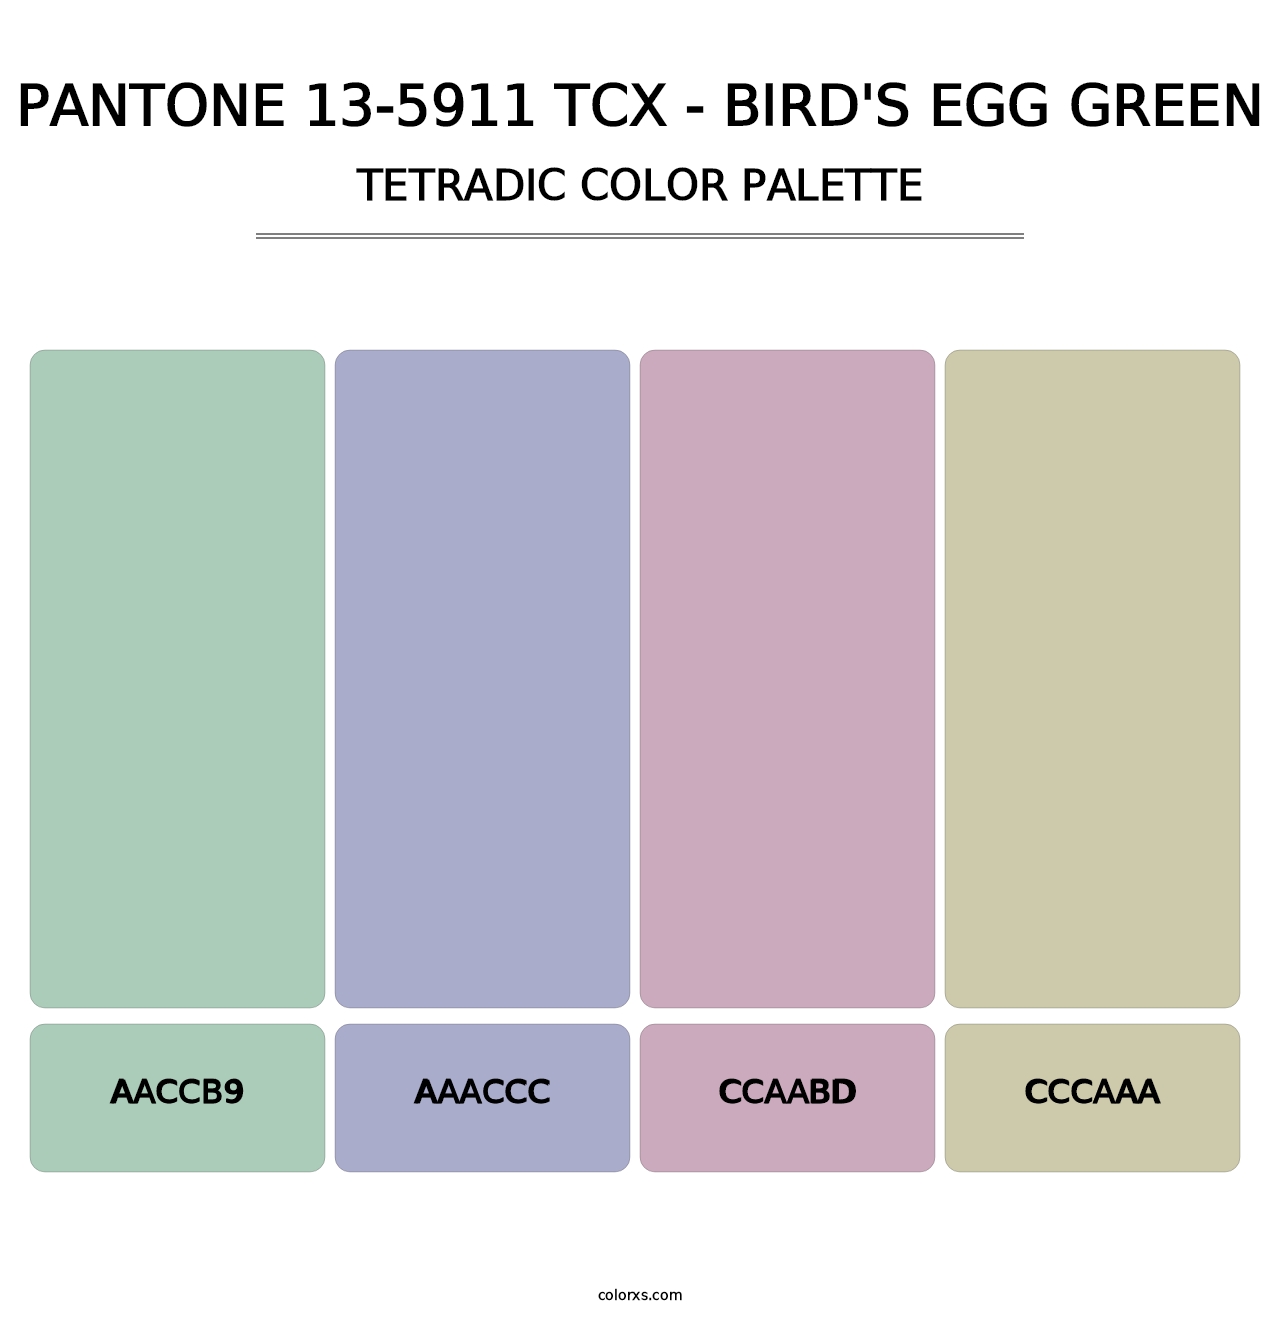 PANTONE 13-5911 TCX - Bird's Egg Green - Tetradic Color Palette